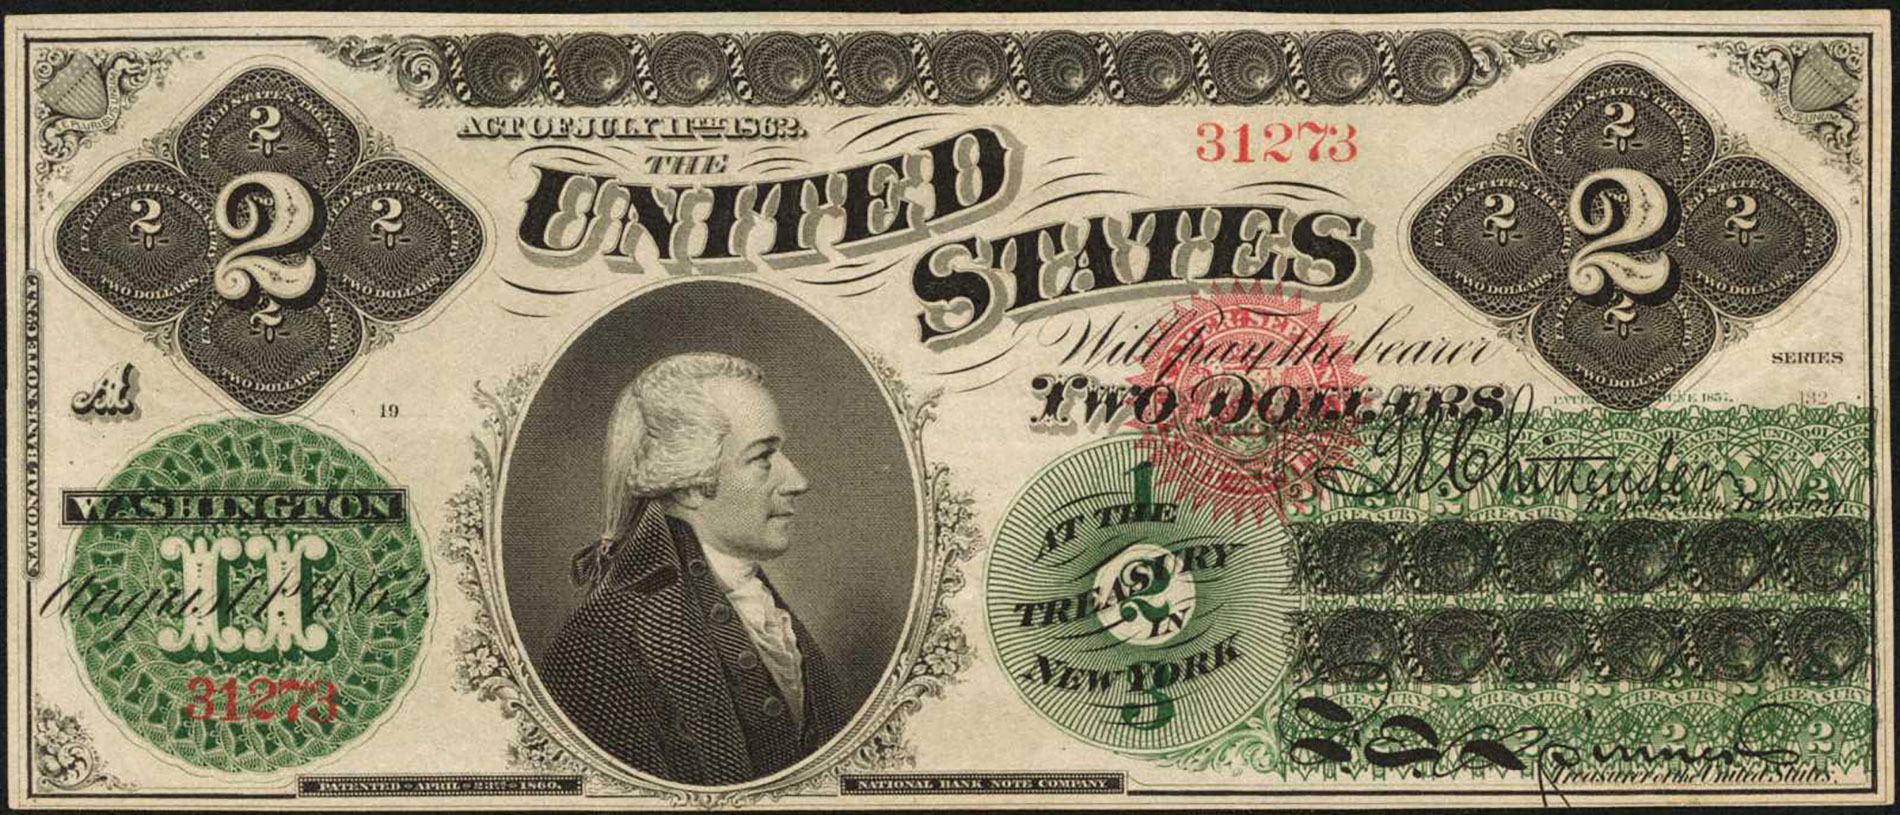 VIRGINIA LICENSED STATEHOOD U.S Two Dollar Bill COA & FOLIO! $2 BILL 